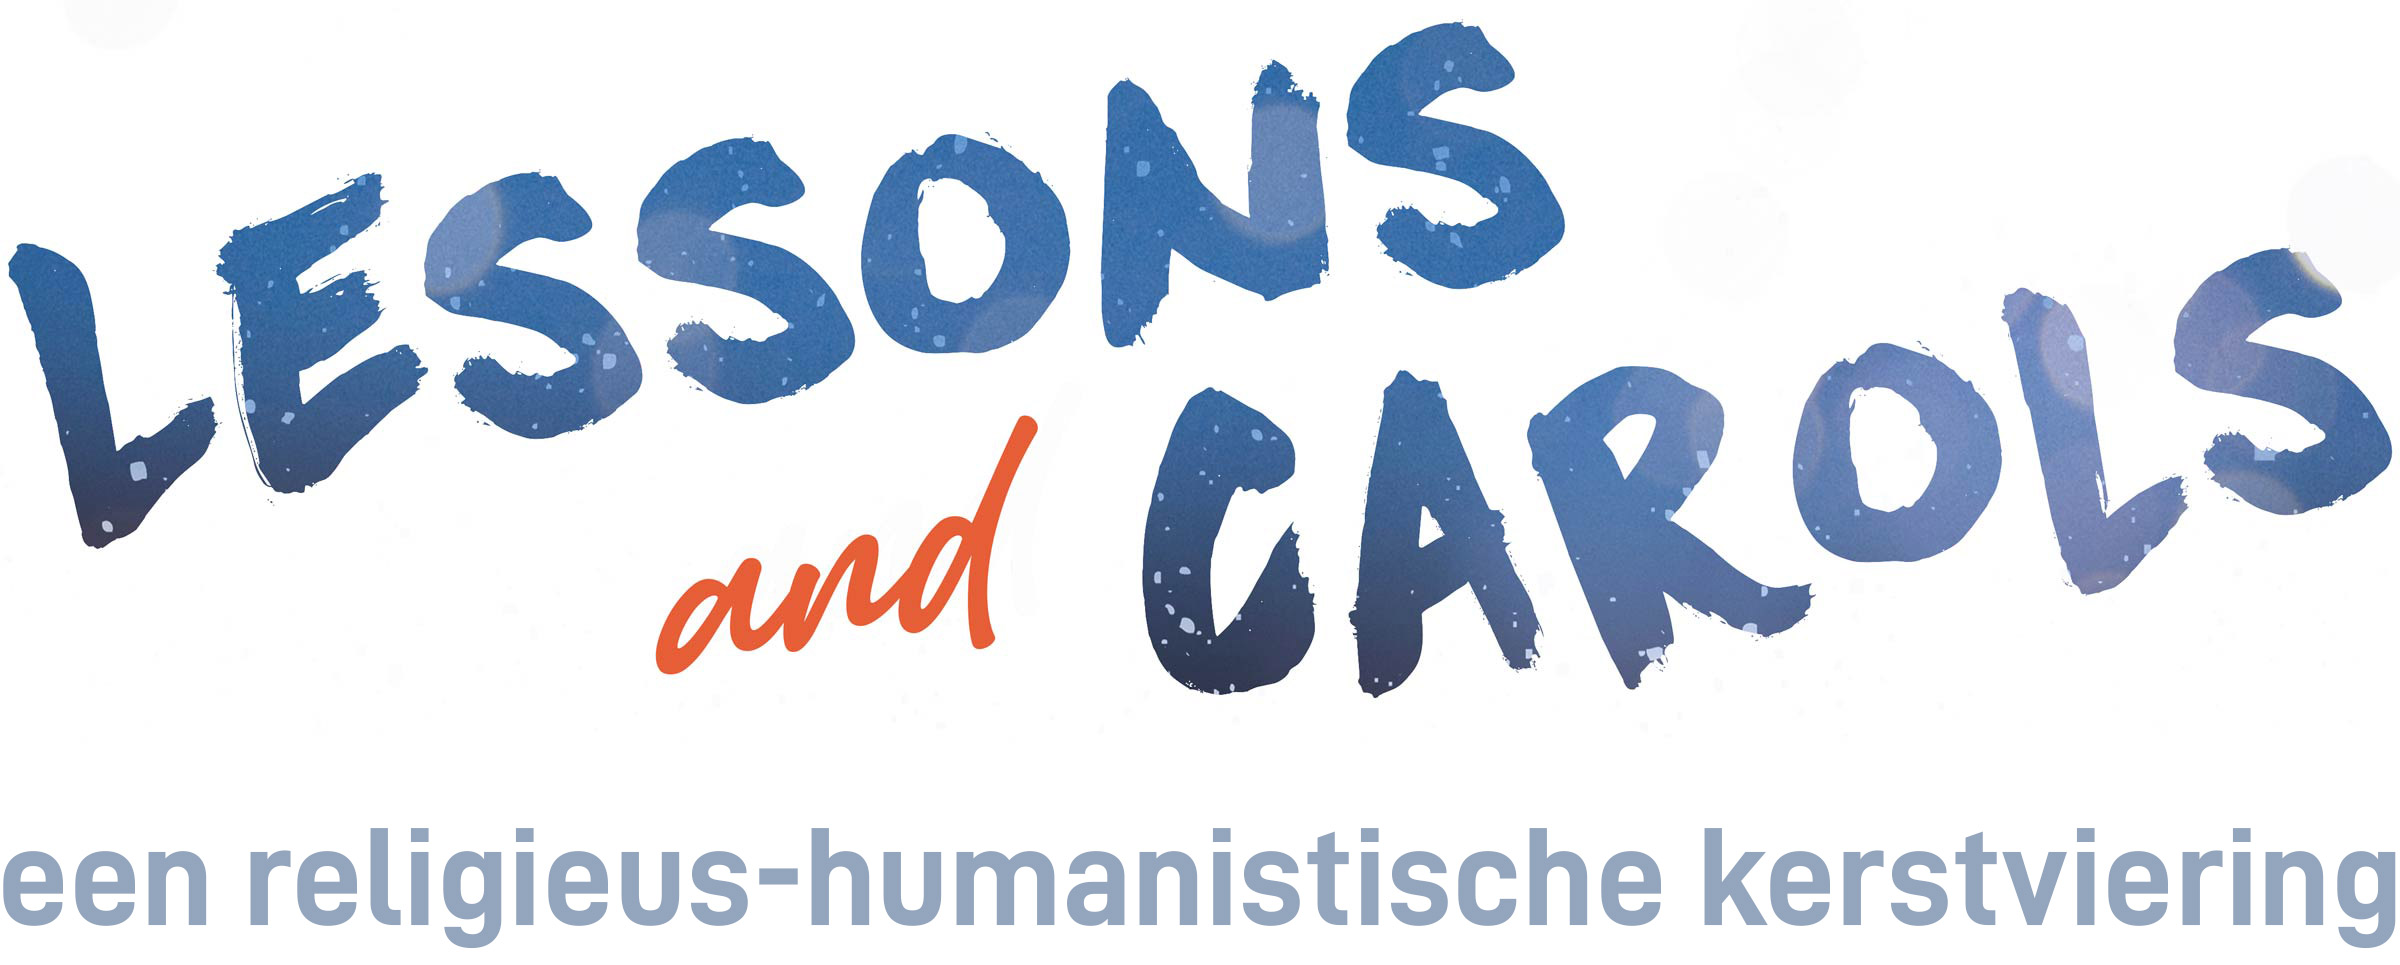 apgen-lessons-and-carols-logo-2023-op-wit.jpg